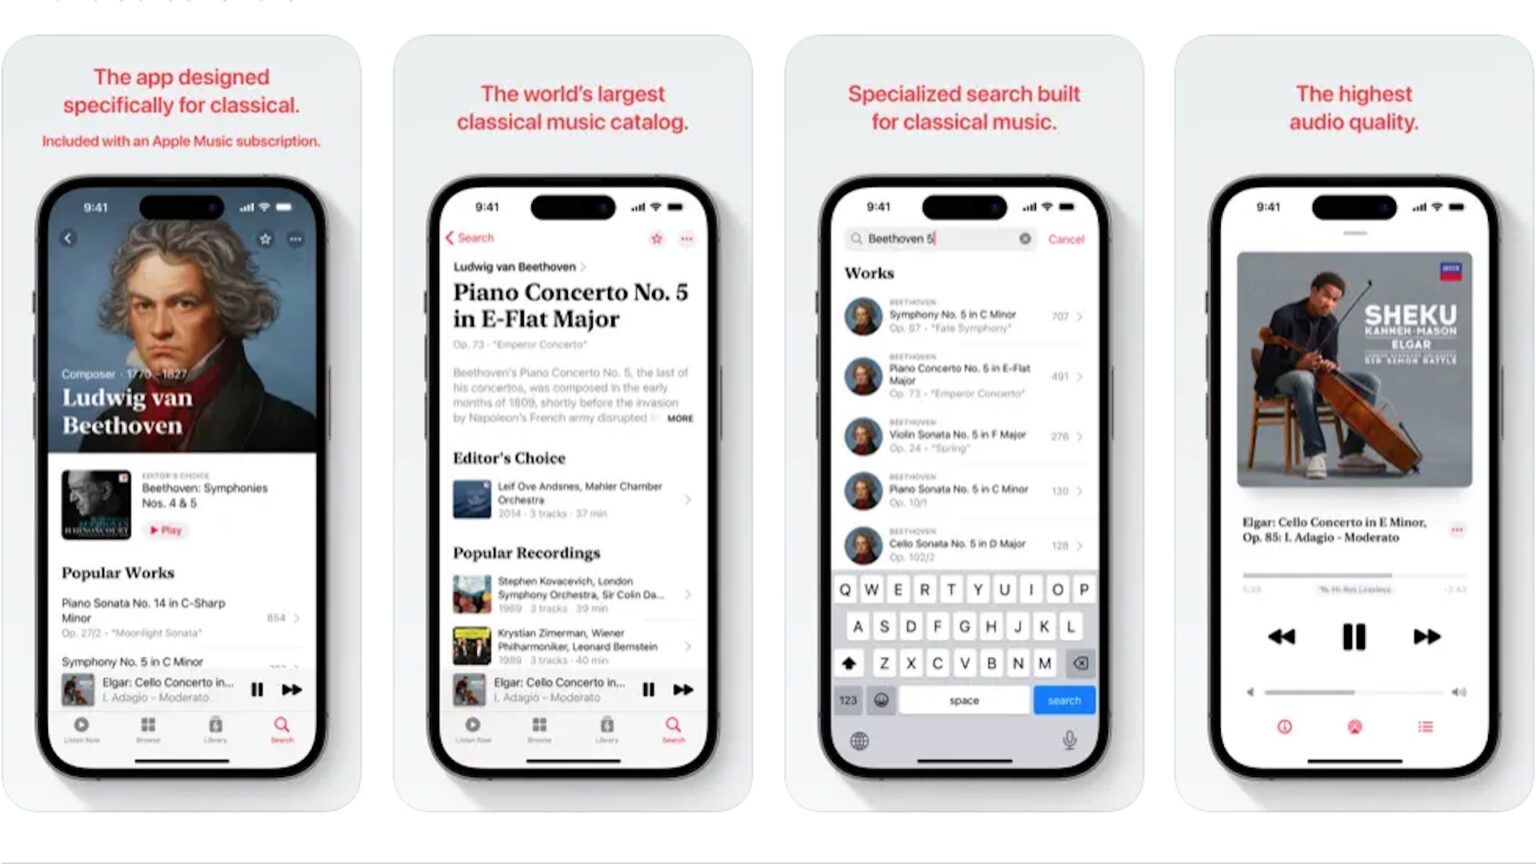 Apple presents the new Classic Apple Music app